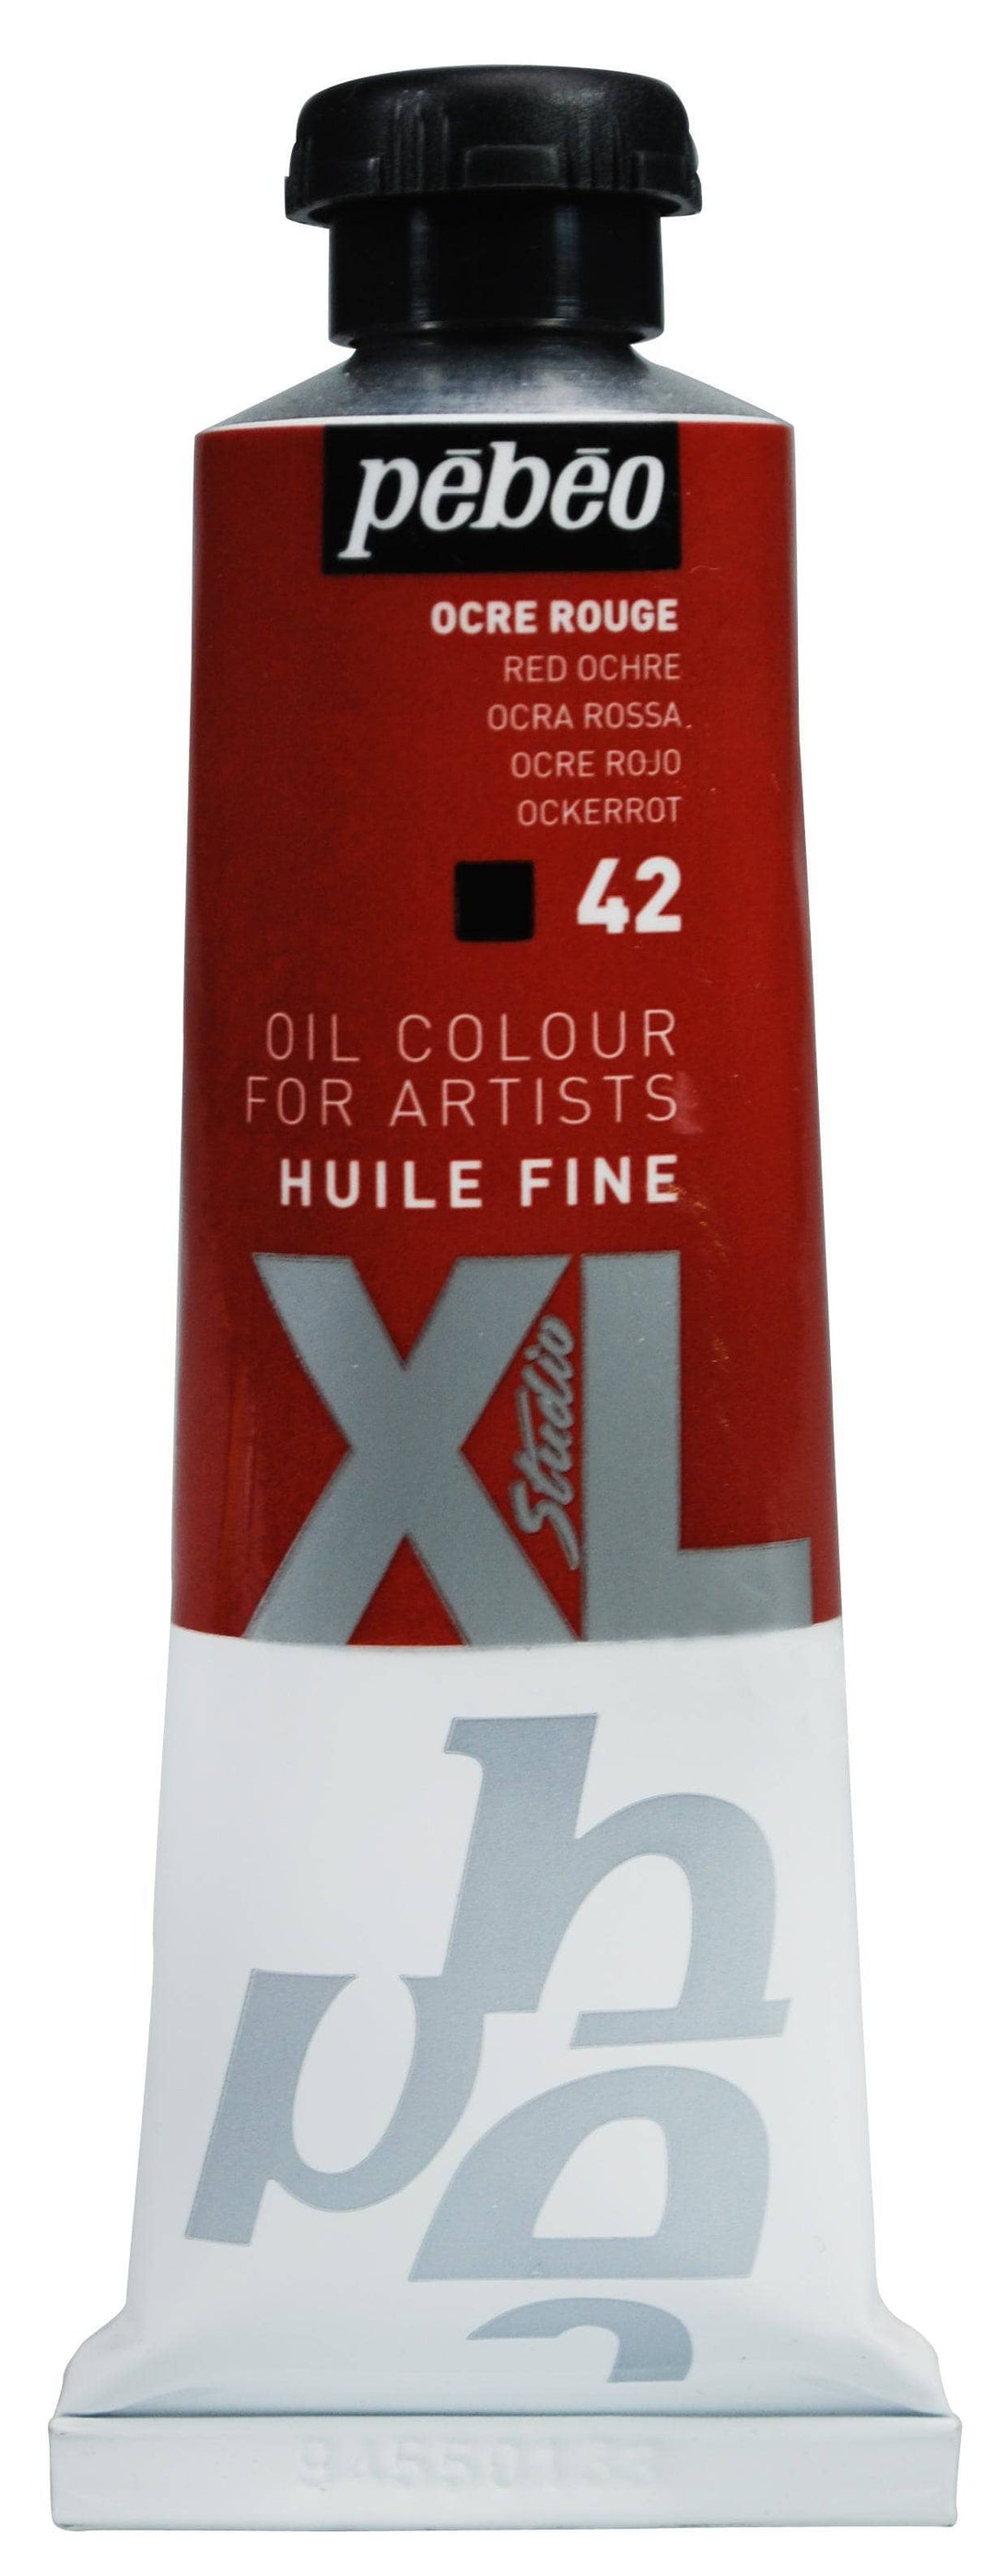 Huile fine Studio XL 37ml - Ocre Rouge
PB937042